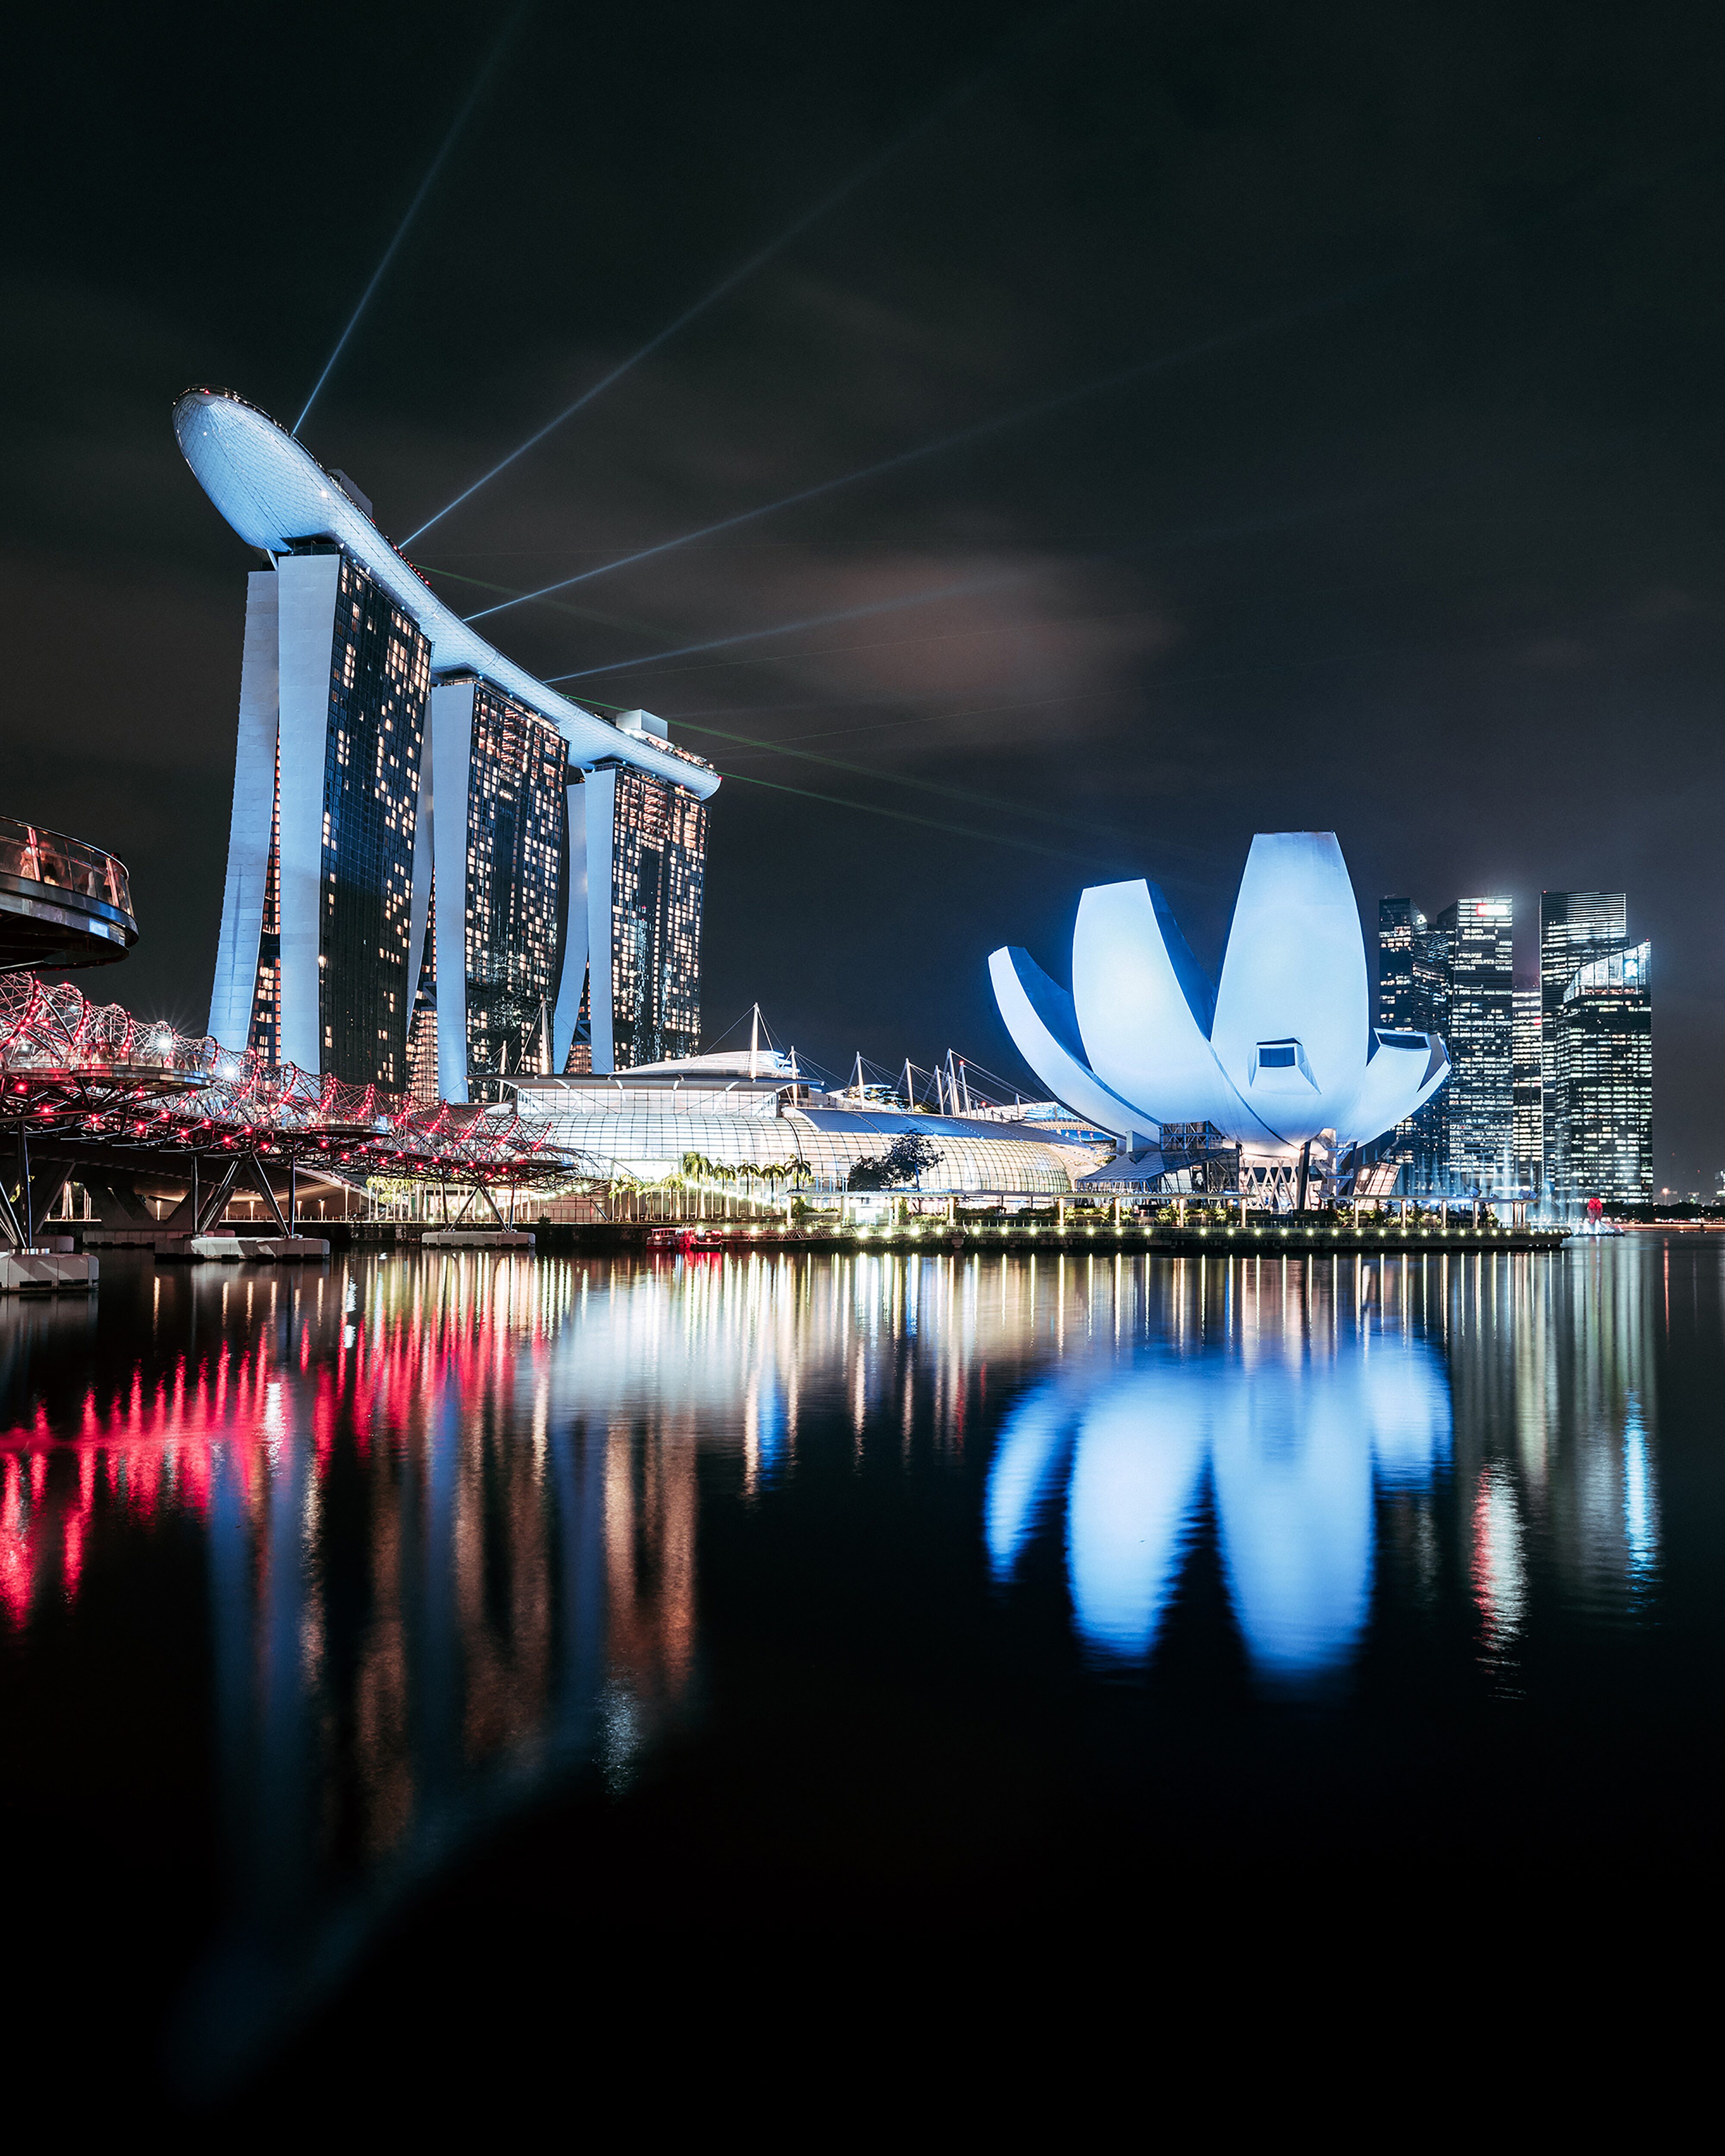 The Night Lights of Singapore